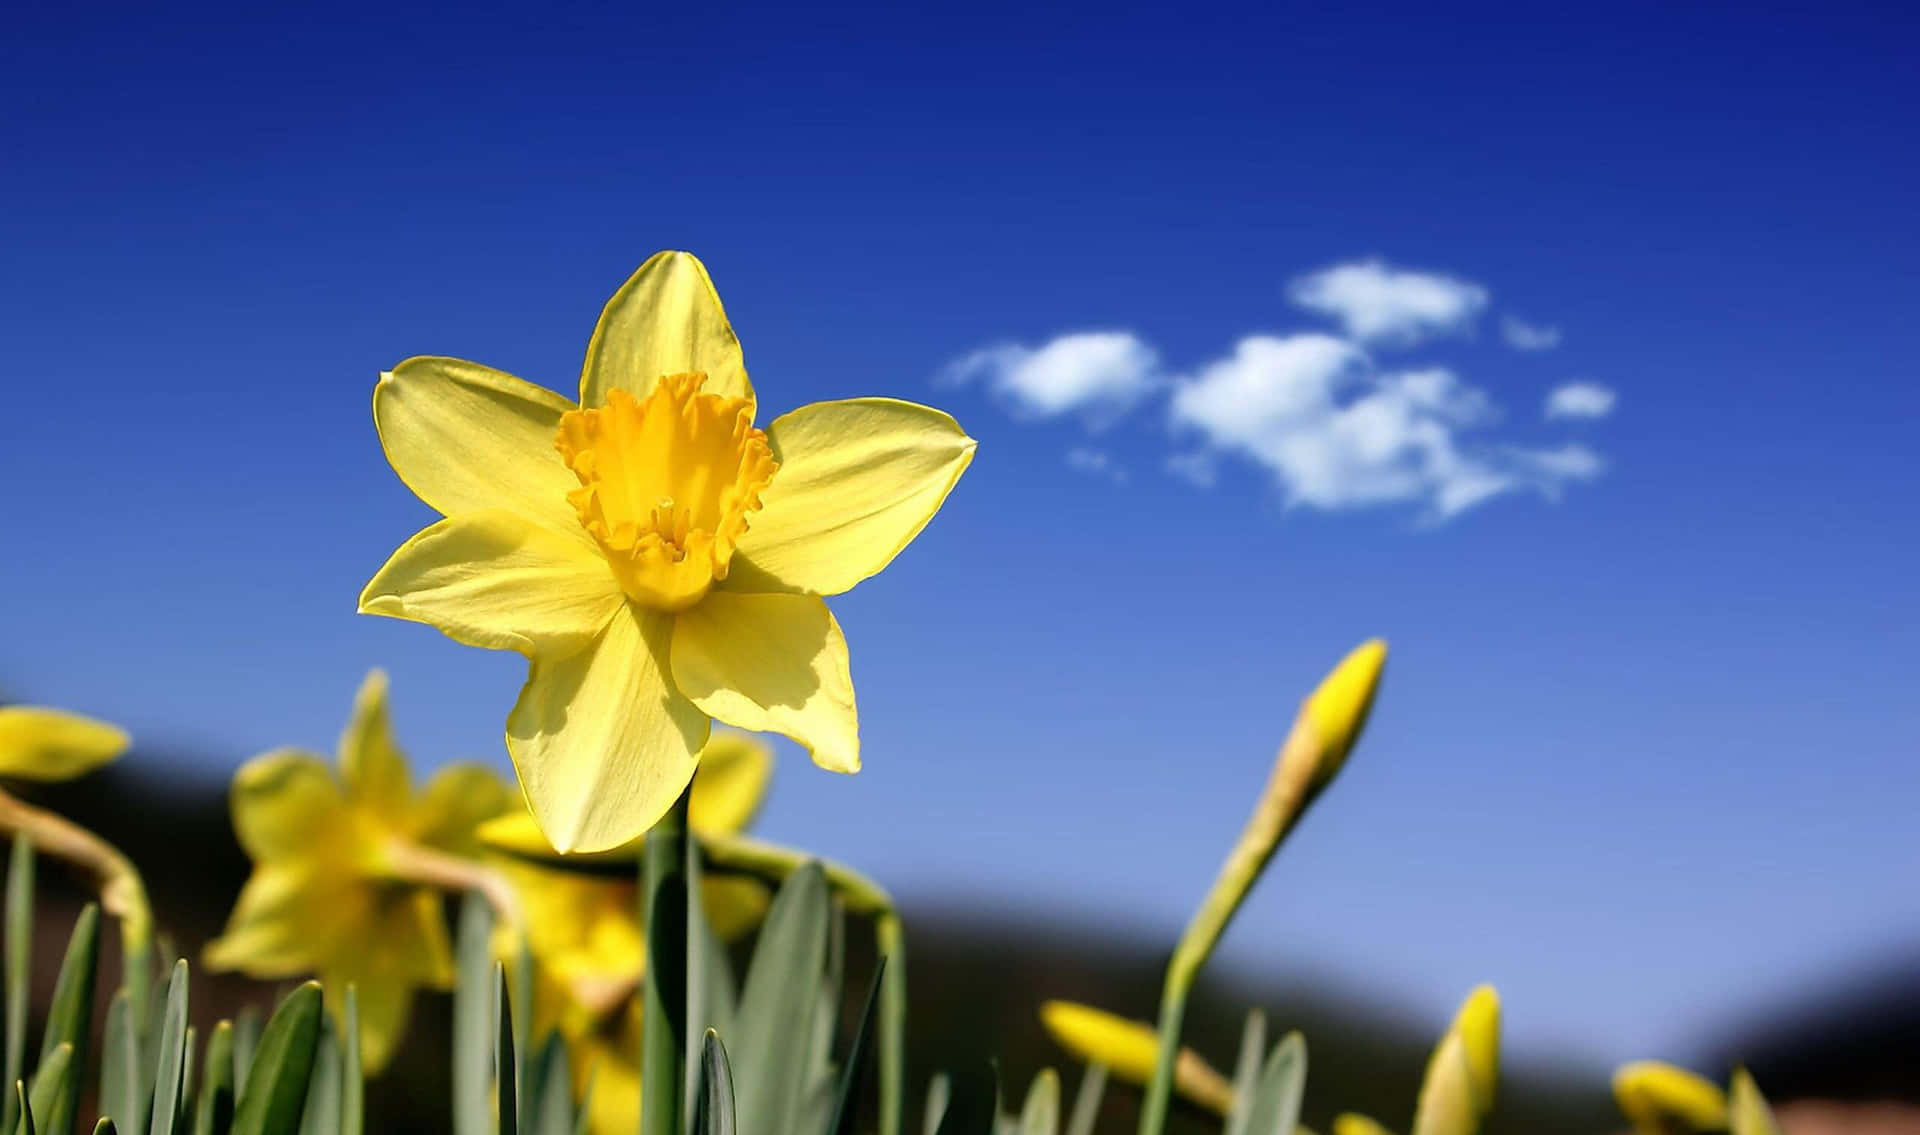 "Bright Yellow Daffodils in a Field" Wallpaper